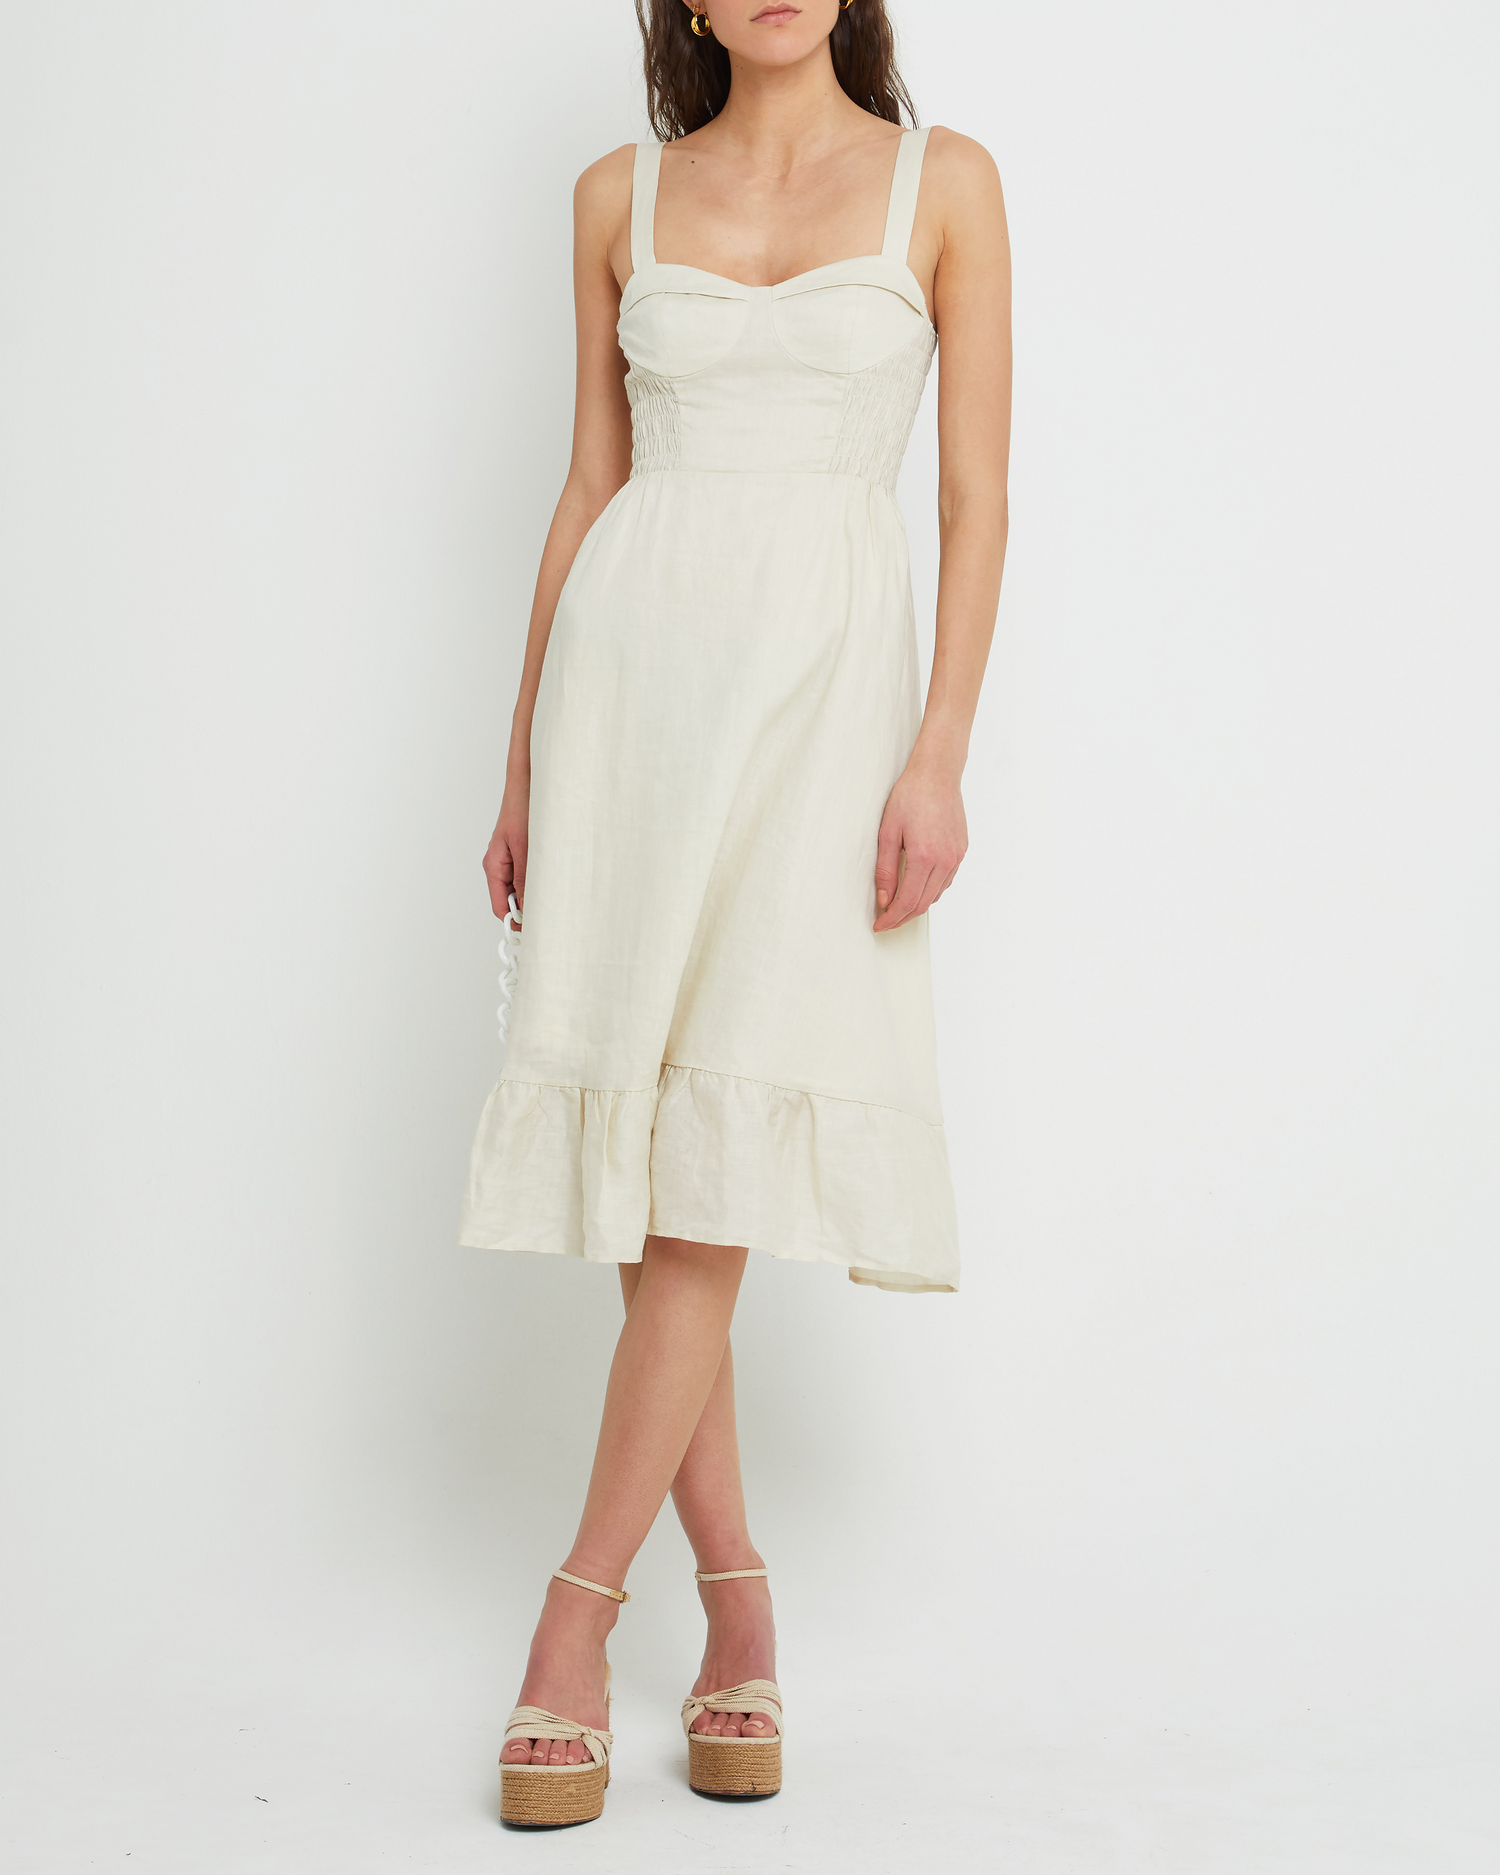 Fourth image of Merel Dress, a  midi dress, linen, bodice, tank, sleeveless